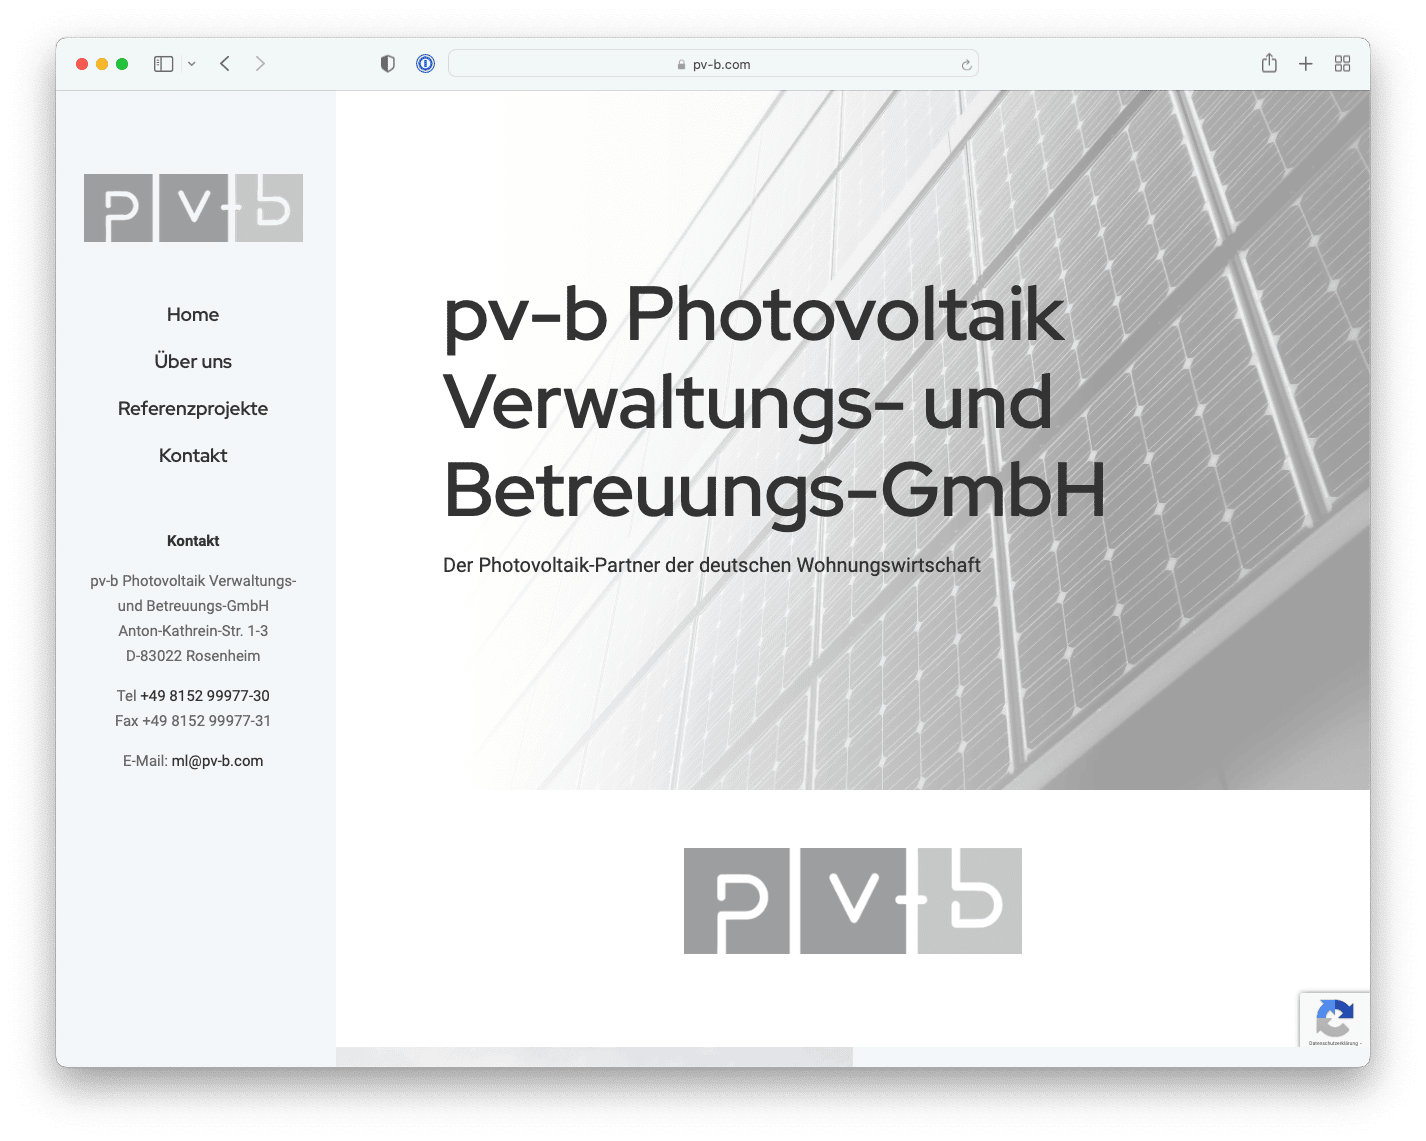 pv-b Photovoltaik Verwaltungs- und Betreuungs-GmbH